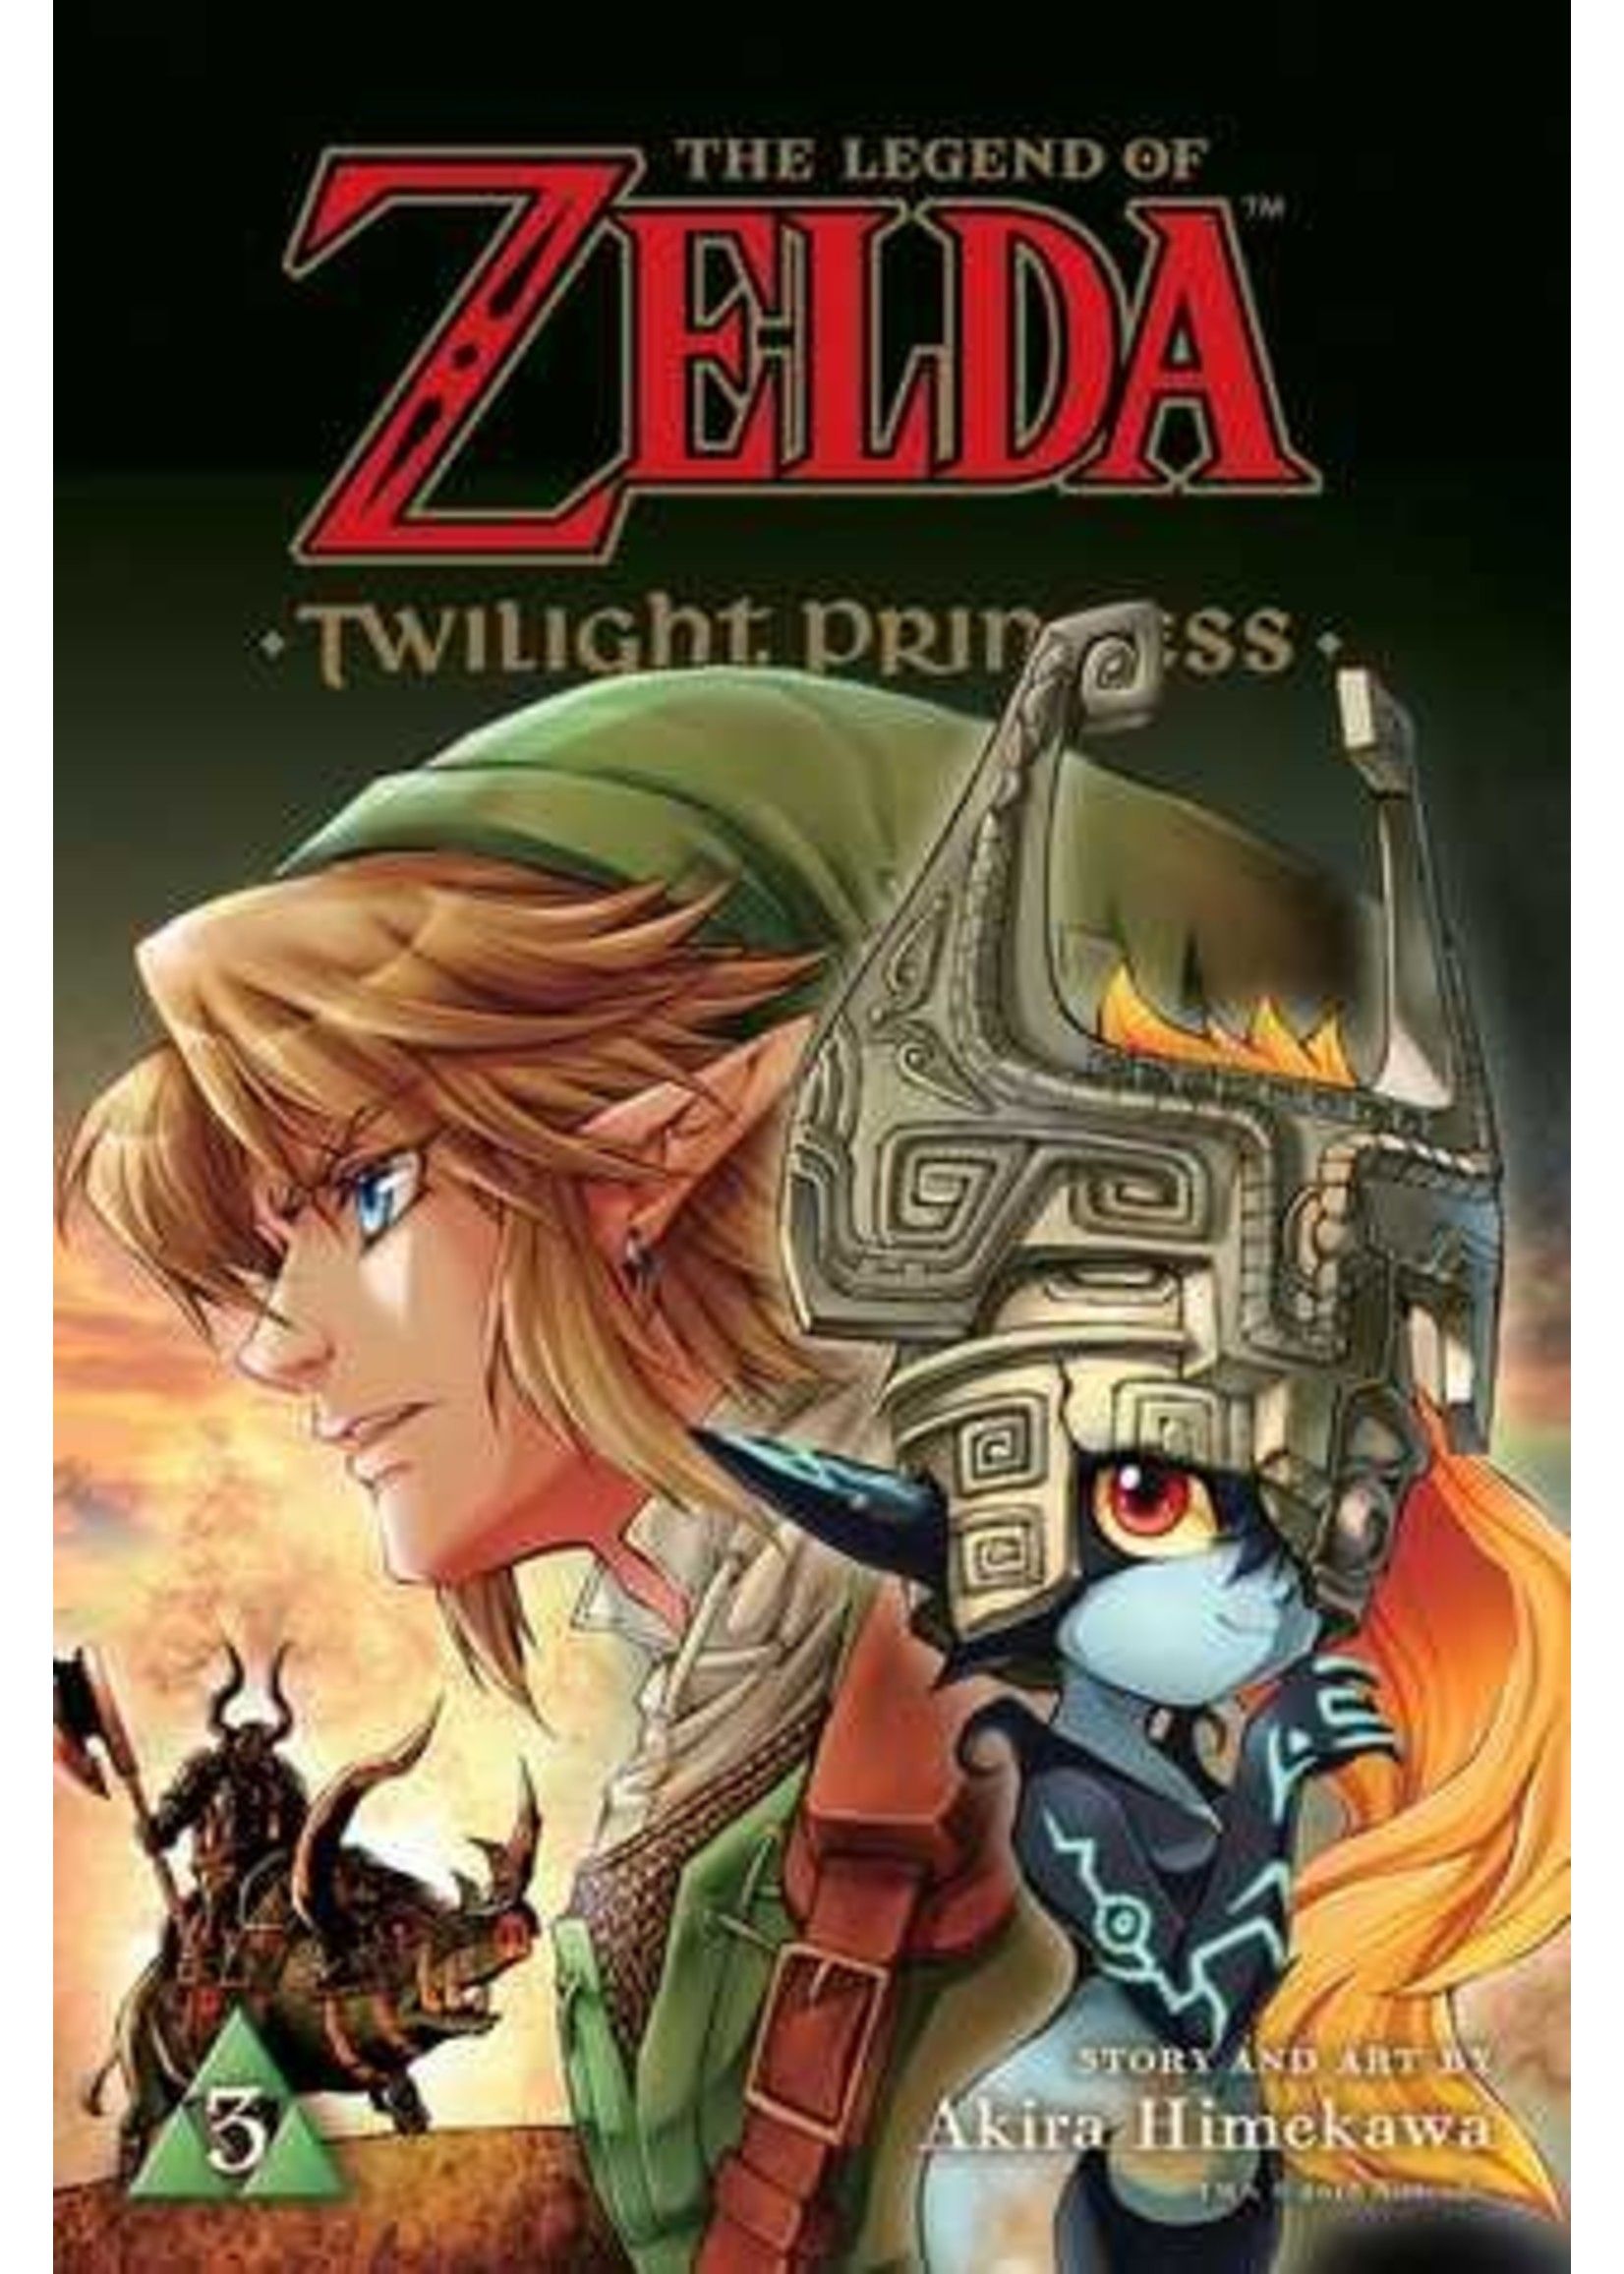 The Legend of Zelda: Twilight Princess, Vol. 3 by Akira Himekawa